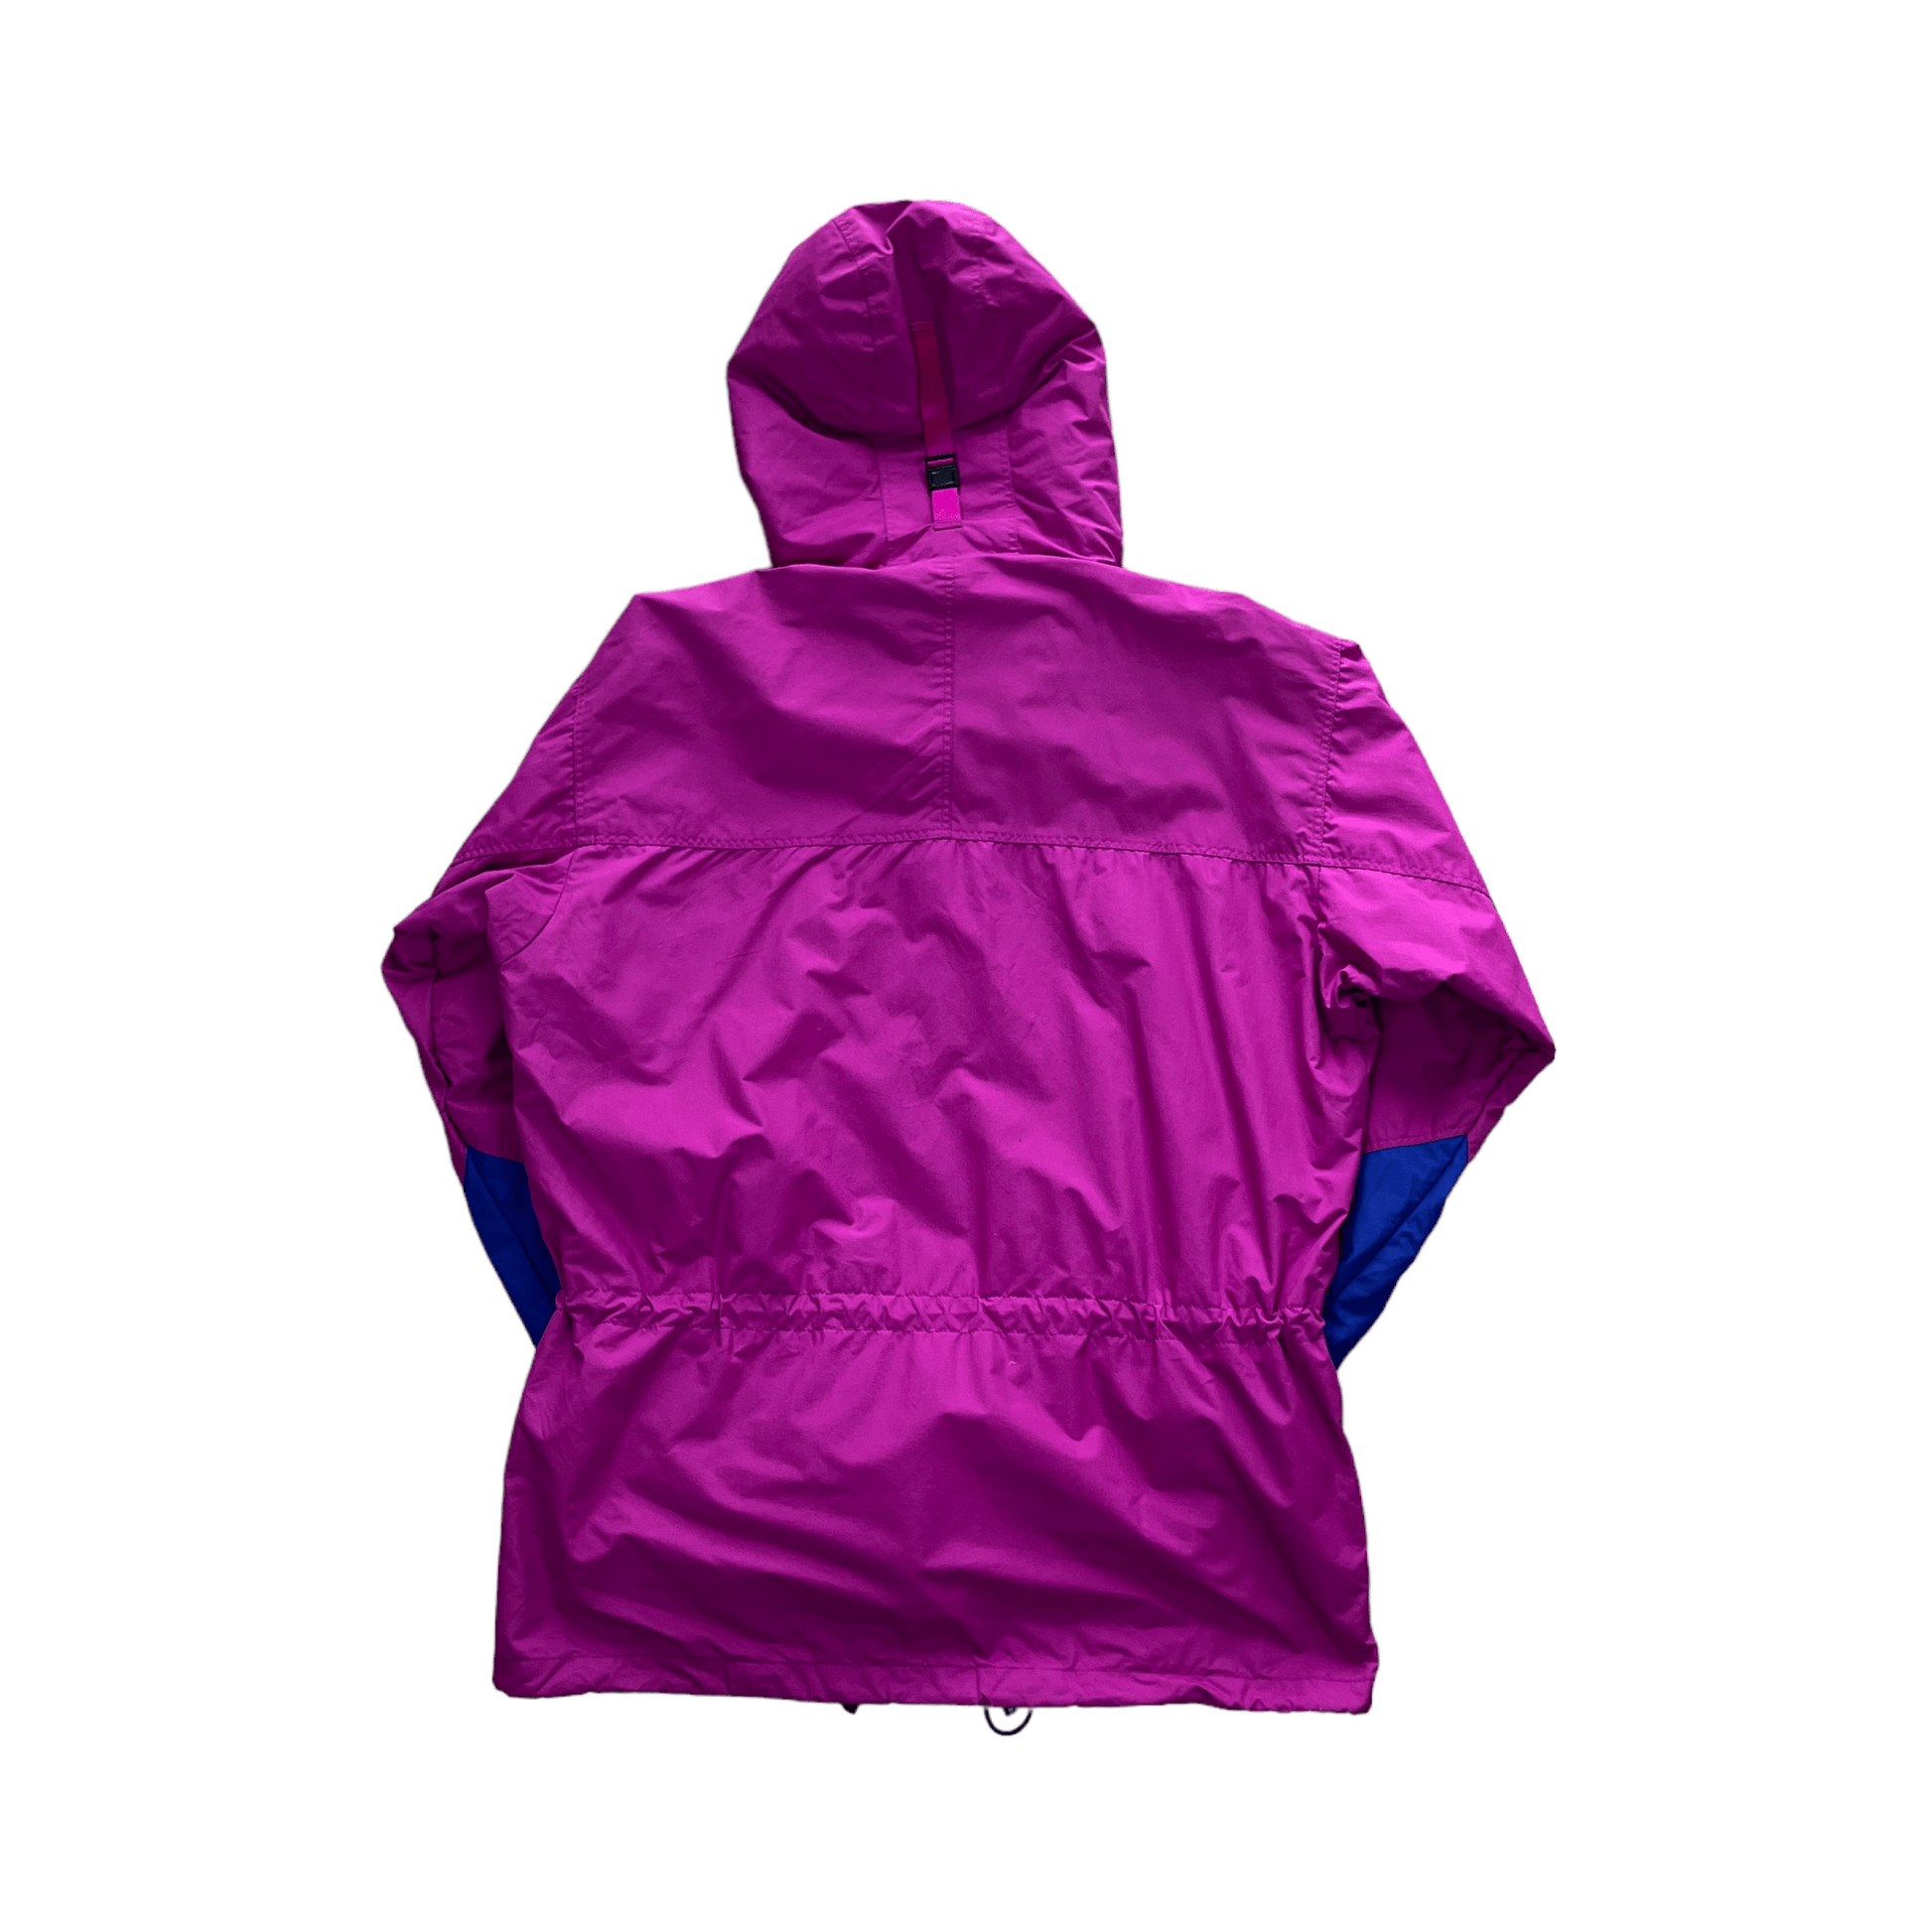 Vintage 90s Purple Patagonia Jacket - Medium - The Streetwear Studio